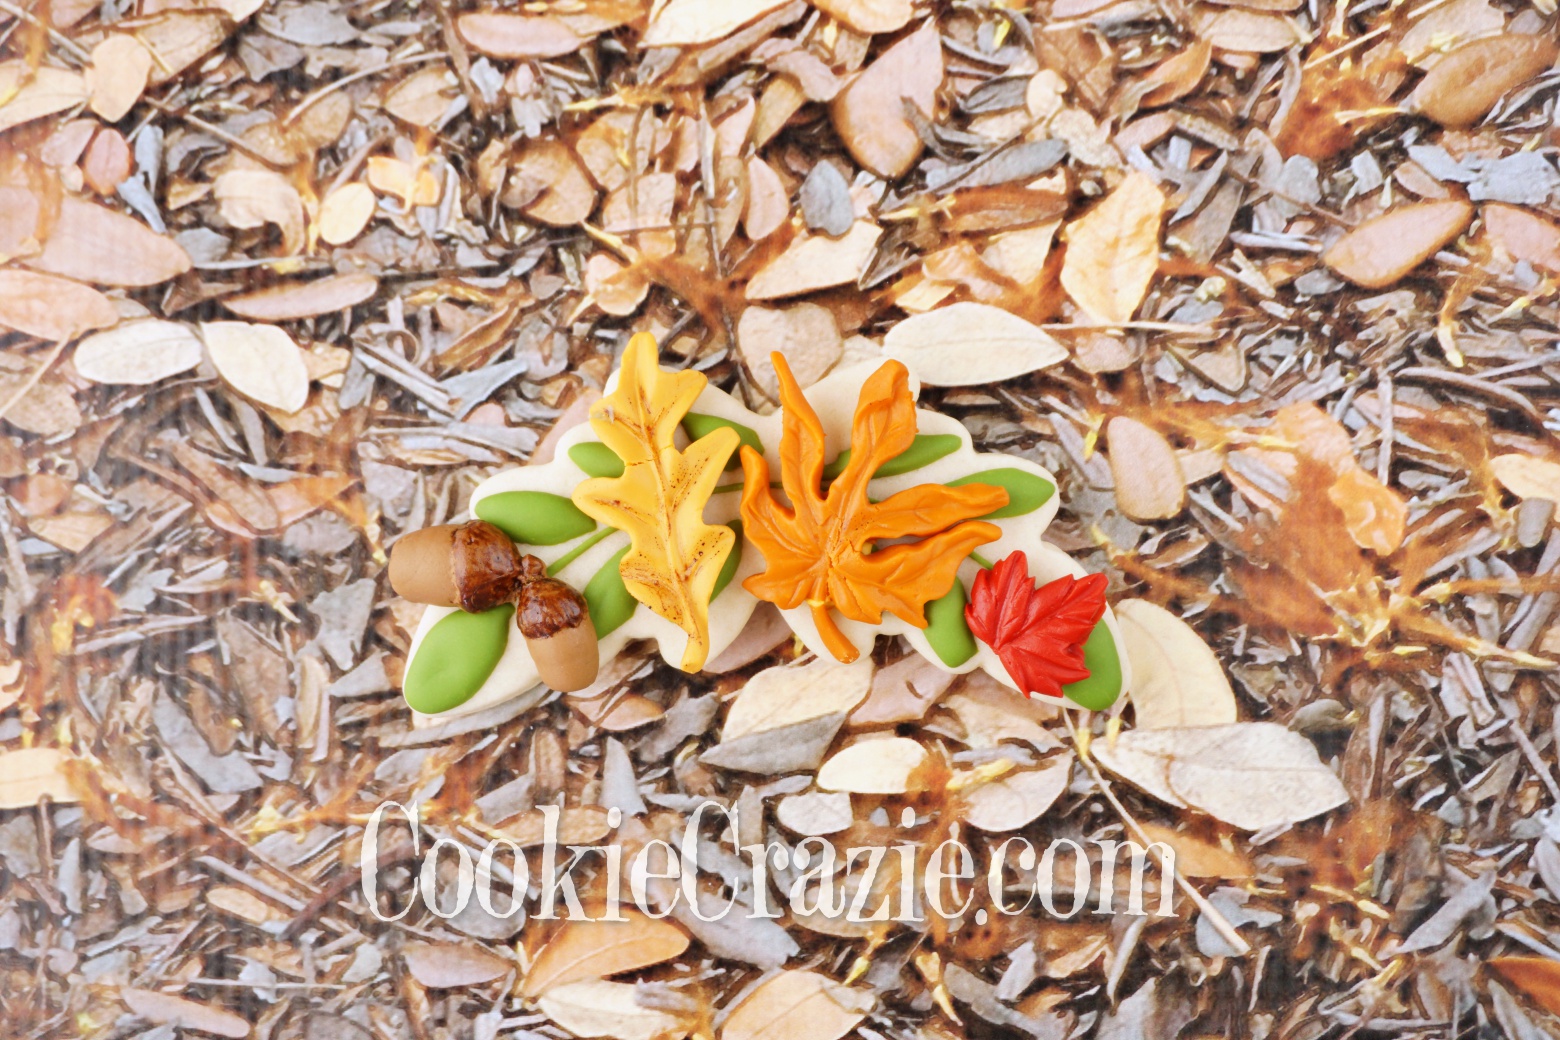  Autumn Leaf Flourish Decorated Sugar Cookie YouTube video  HERE  